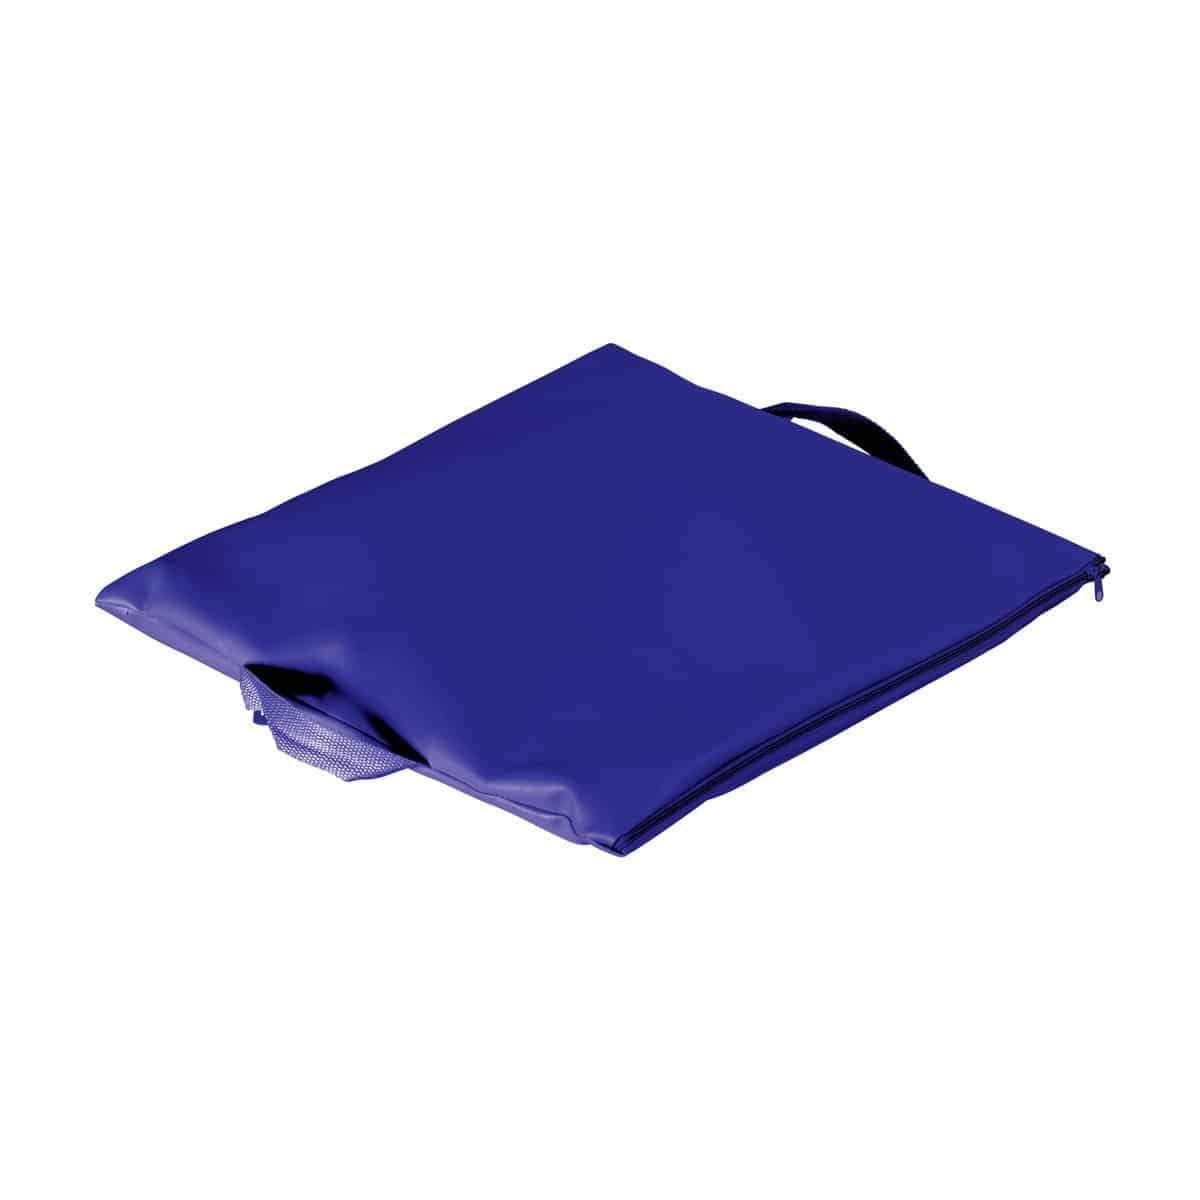 Duro-Med Flotation Cushion with Navy Poly/Cotton Cover - 100%-Gel - Senior.com Cushions